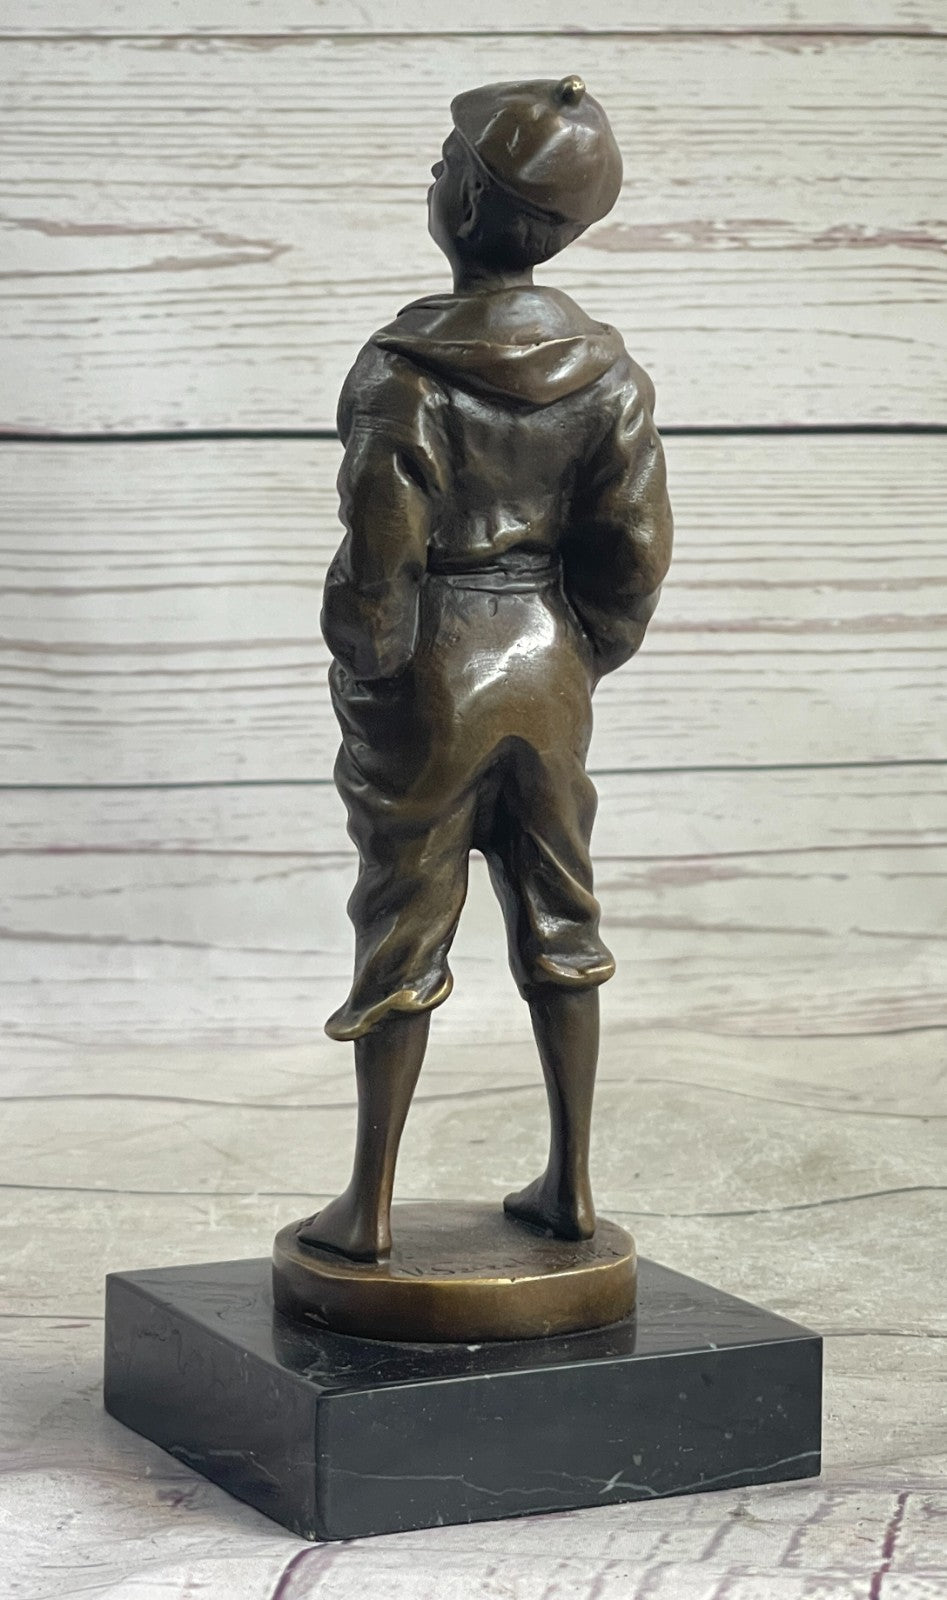 Vintage Signed Szczeblewski Bronze Sculpture of a Whistling German Boy - Fine Detailed Art